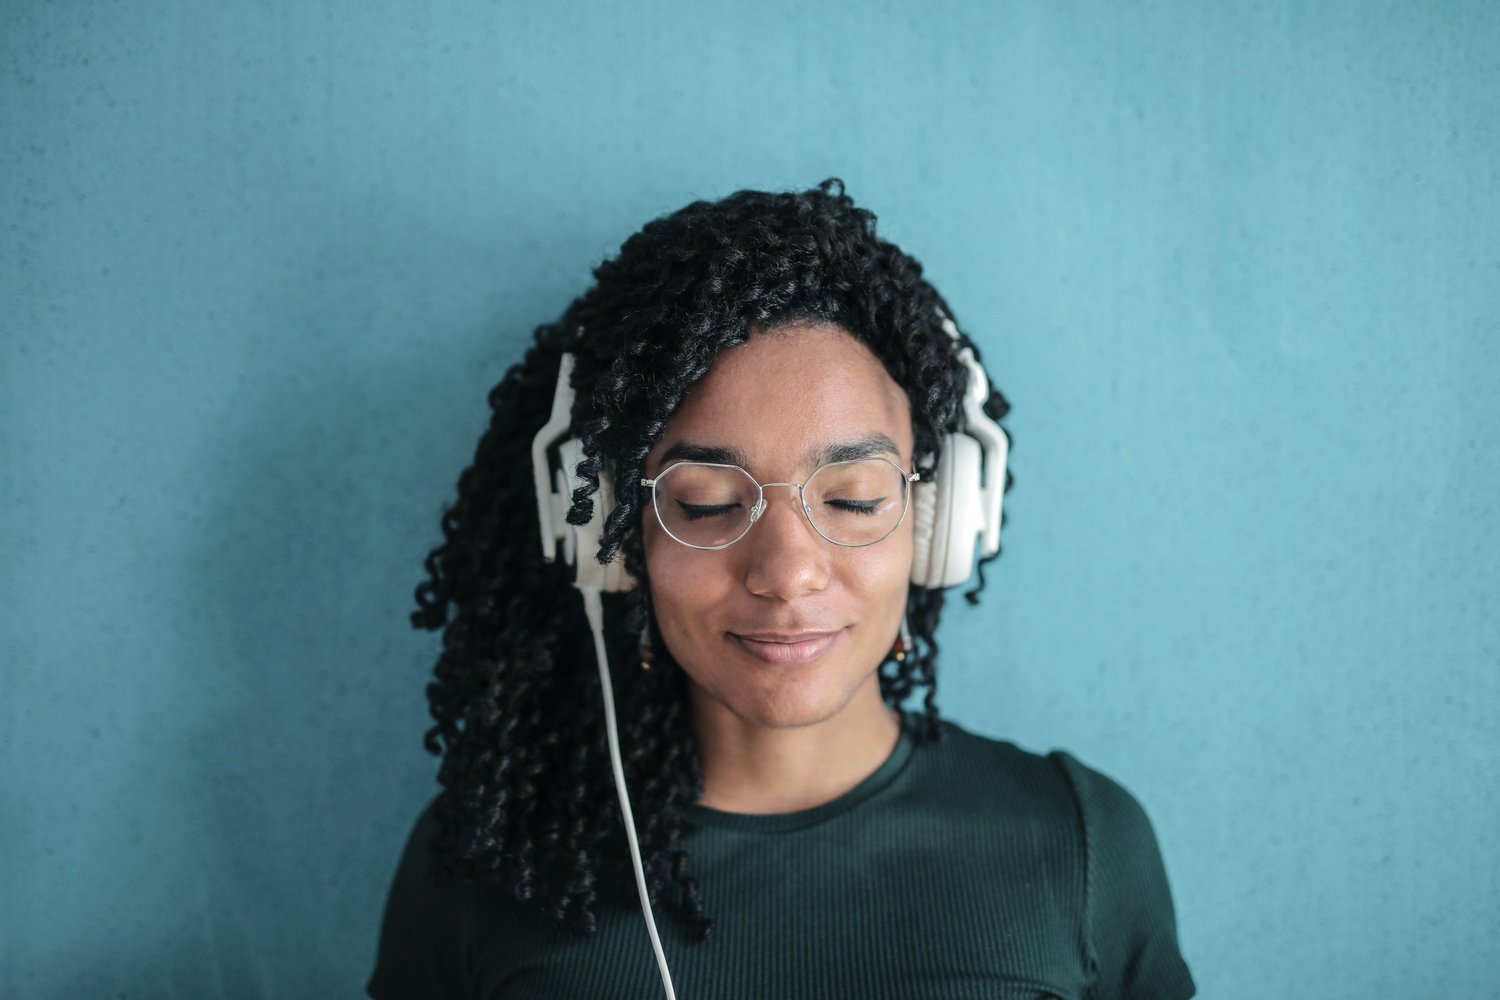 Medicinal Benefits of Sound